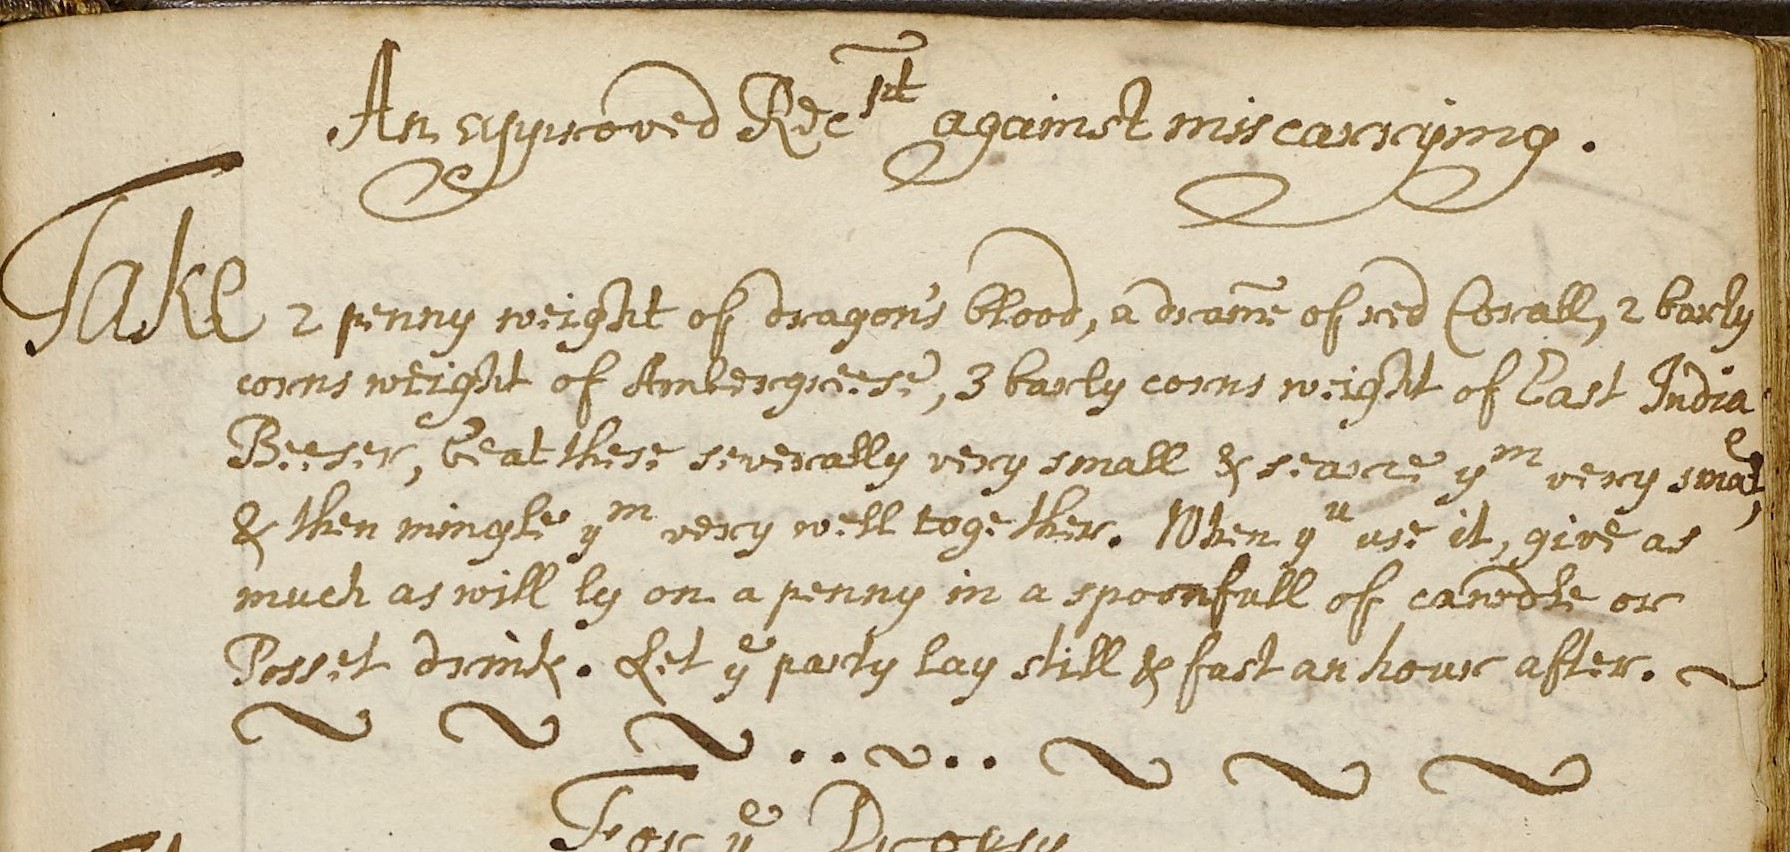 Handwritten text describing a treatment against miscarriage involving 'dragons' blood'